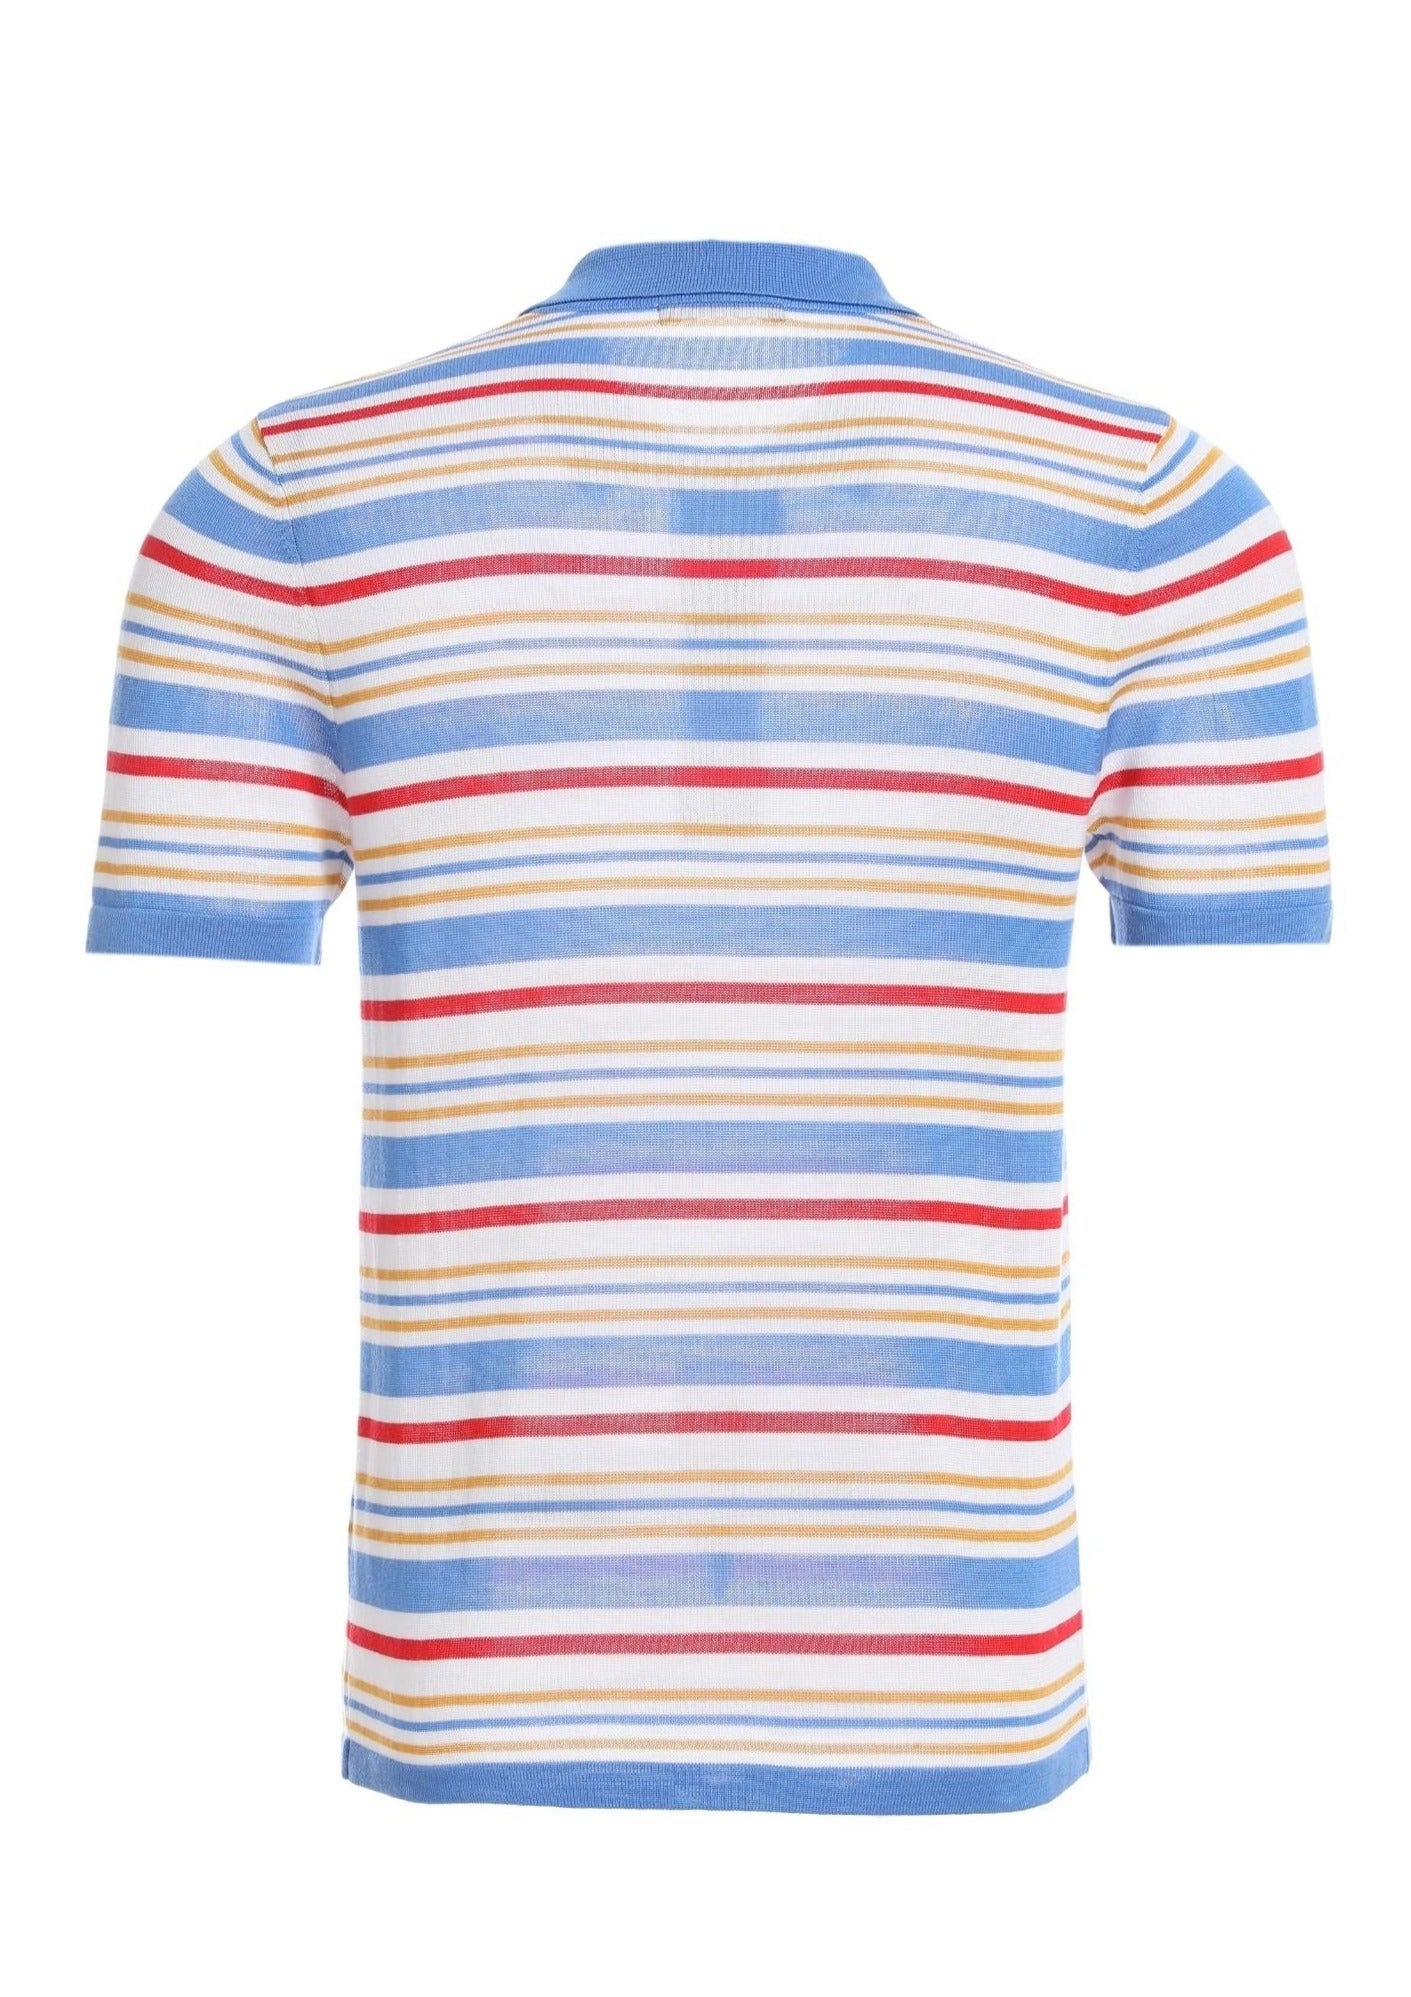 Fantasy Stripe Multicolor Tencel Polo | Stripe Multicolor Size S M L XL XXL | Bellemere New York 100% Sustainable Fashion | 100% Tencel | Tennis & Golf Polo Shirt